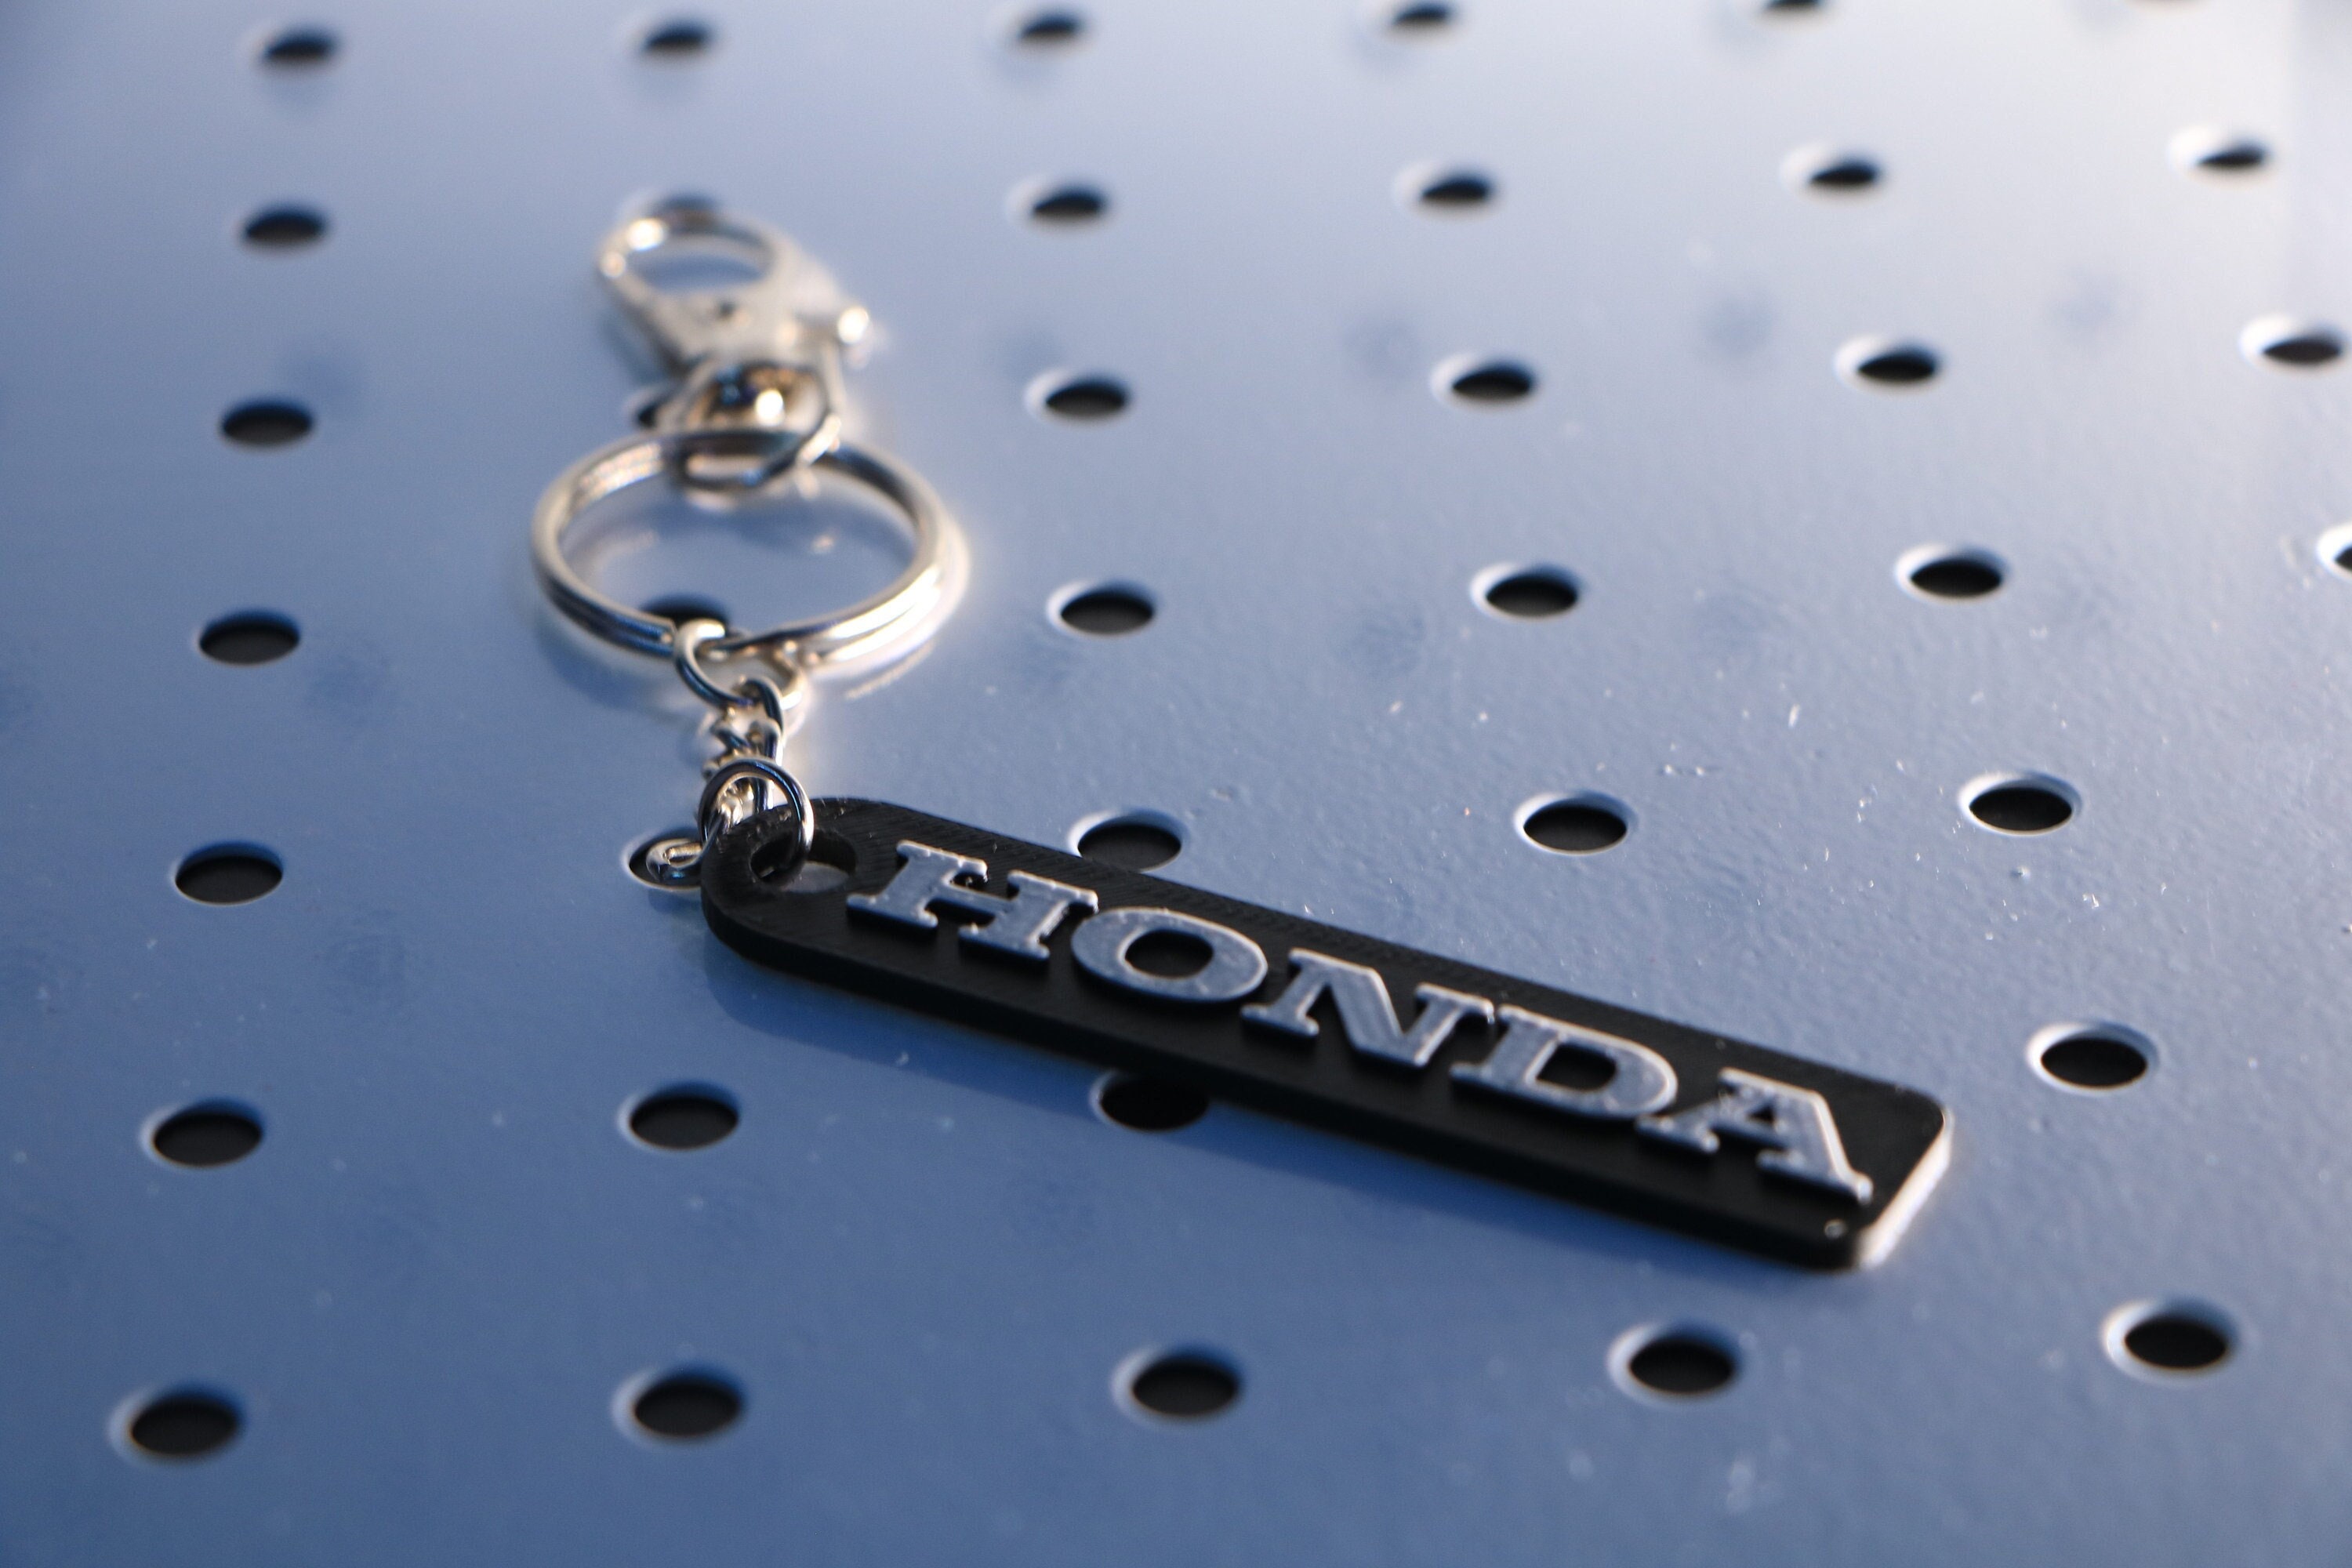 Metal Keychain Double Side Logo Key Chain Key Ring for Honda Type